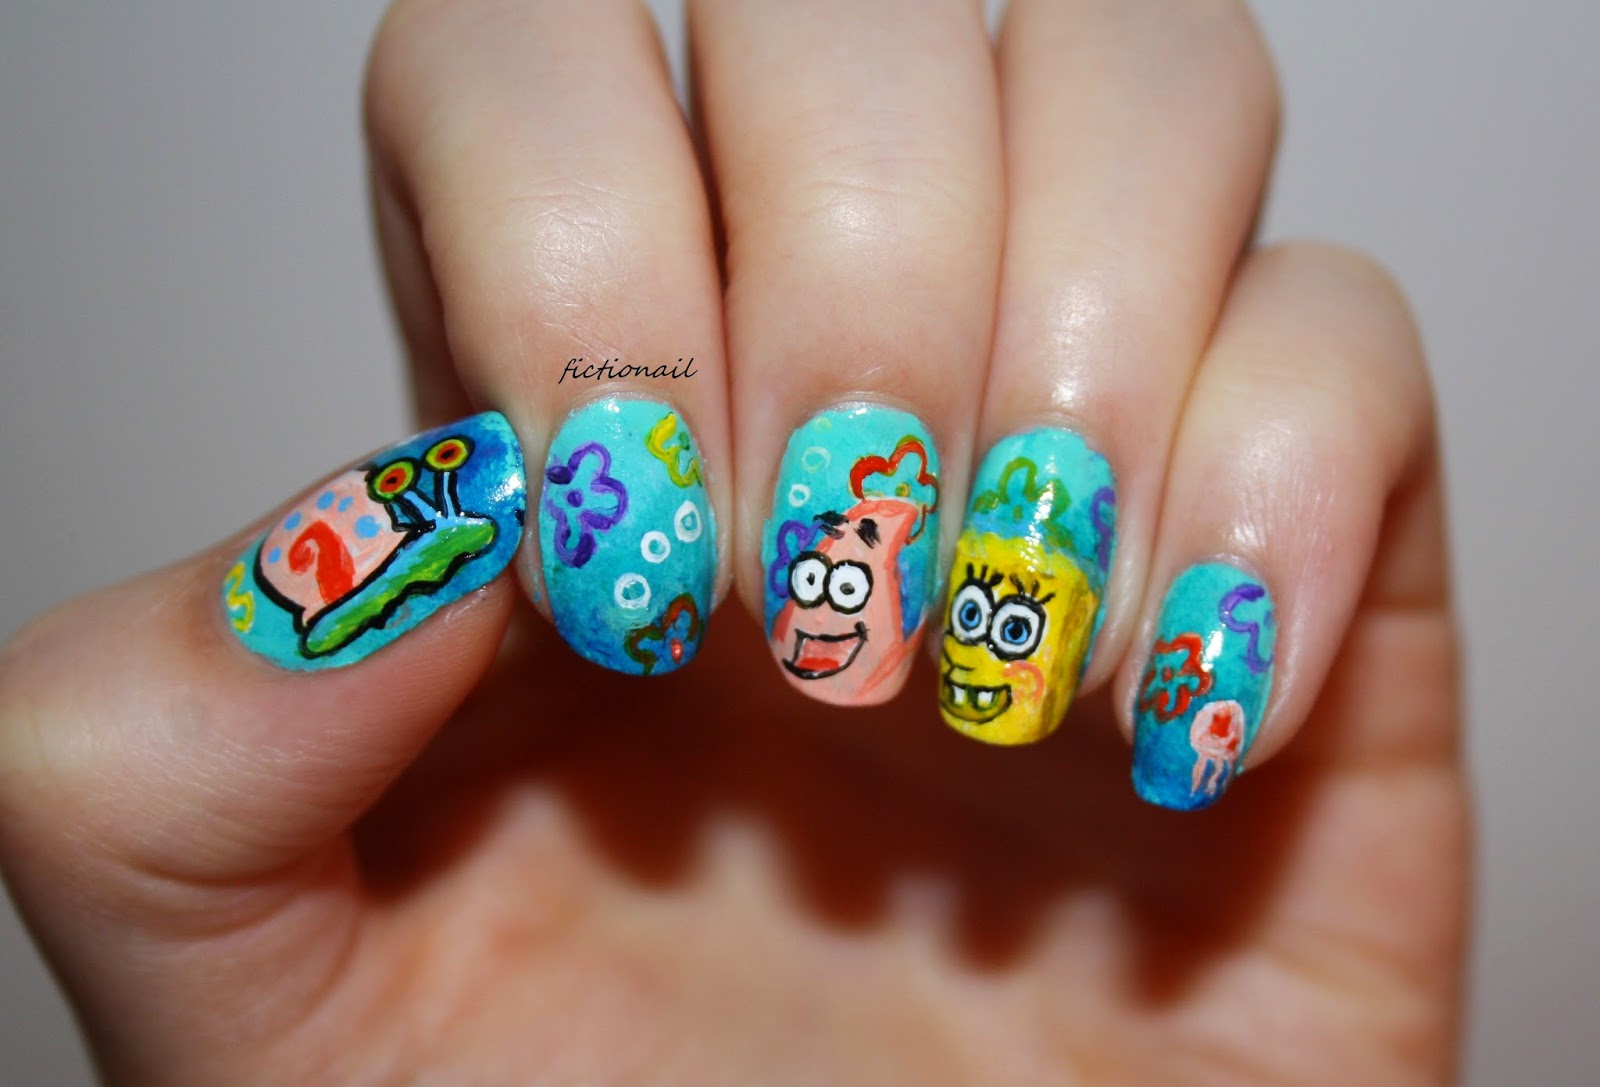 Spongebob and Patrick Nail Art - wide 5